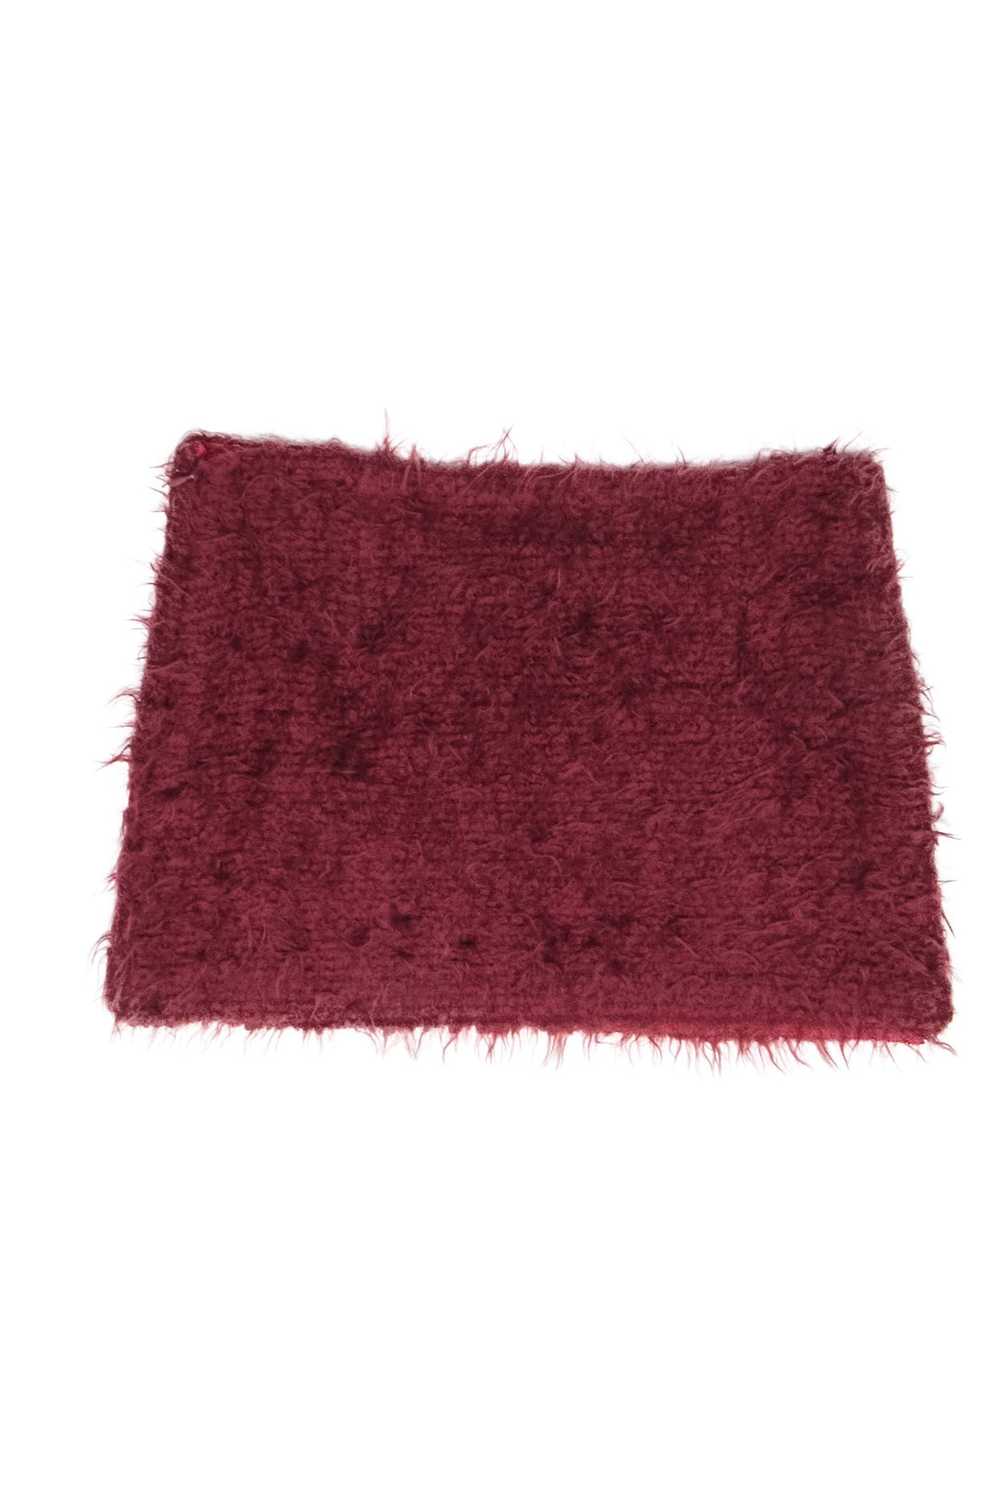 Camilla Signori - Maroon Red Fuzzy Knit Mini Skir… - image 2